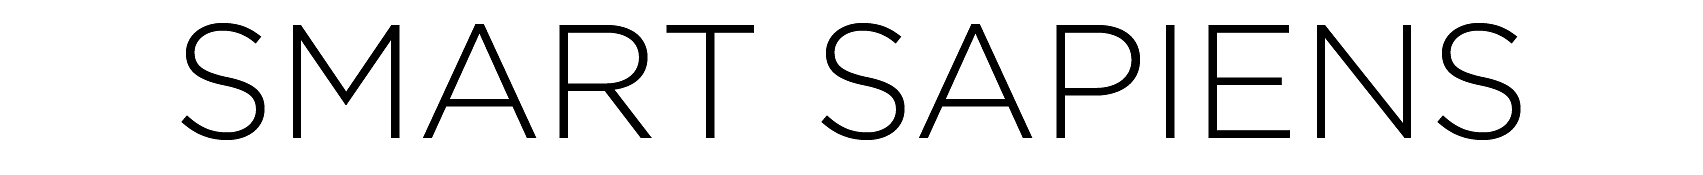 SmartSapiens logo